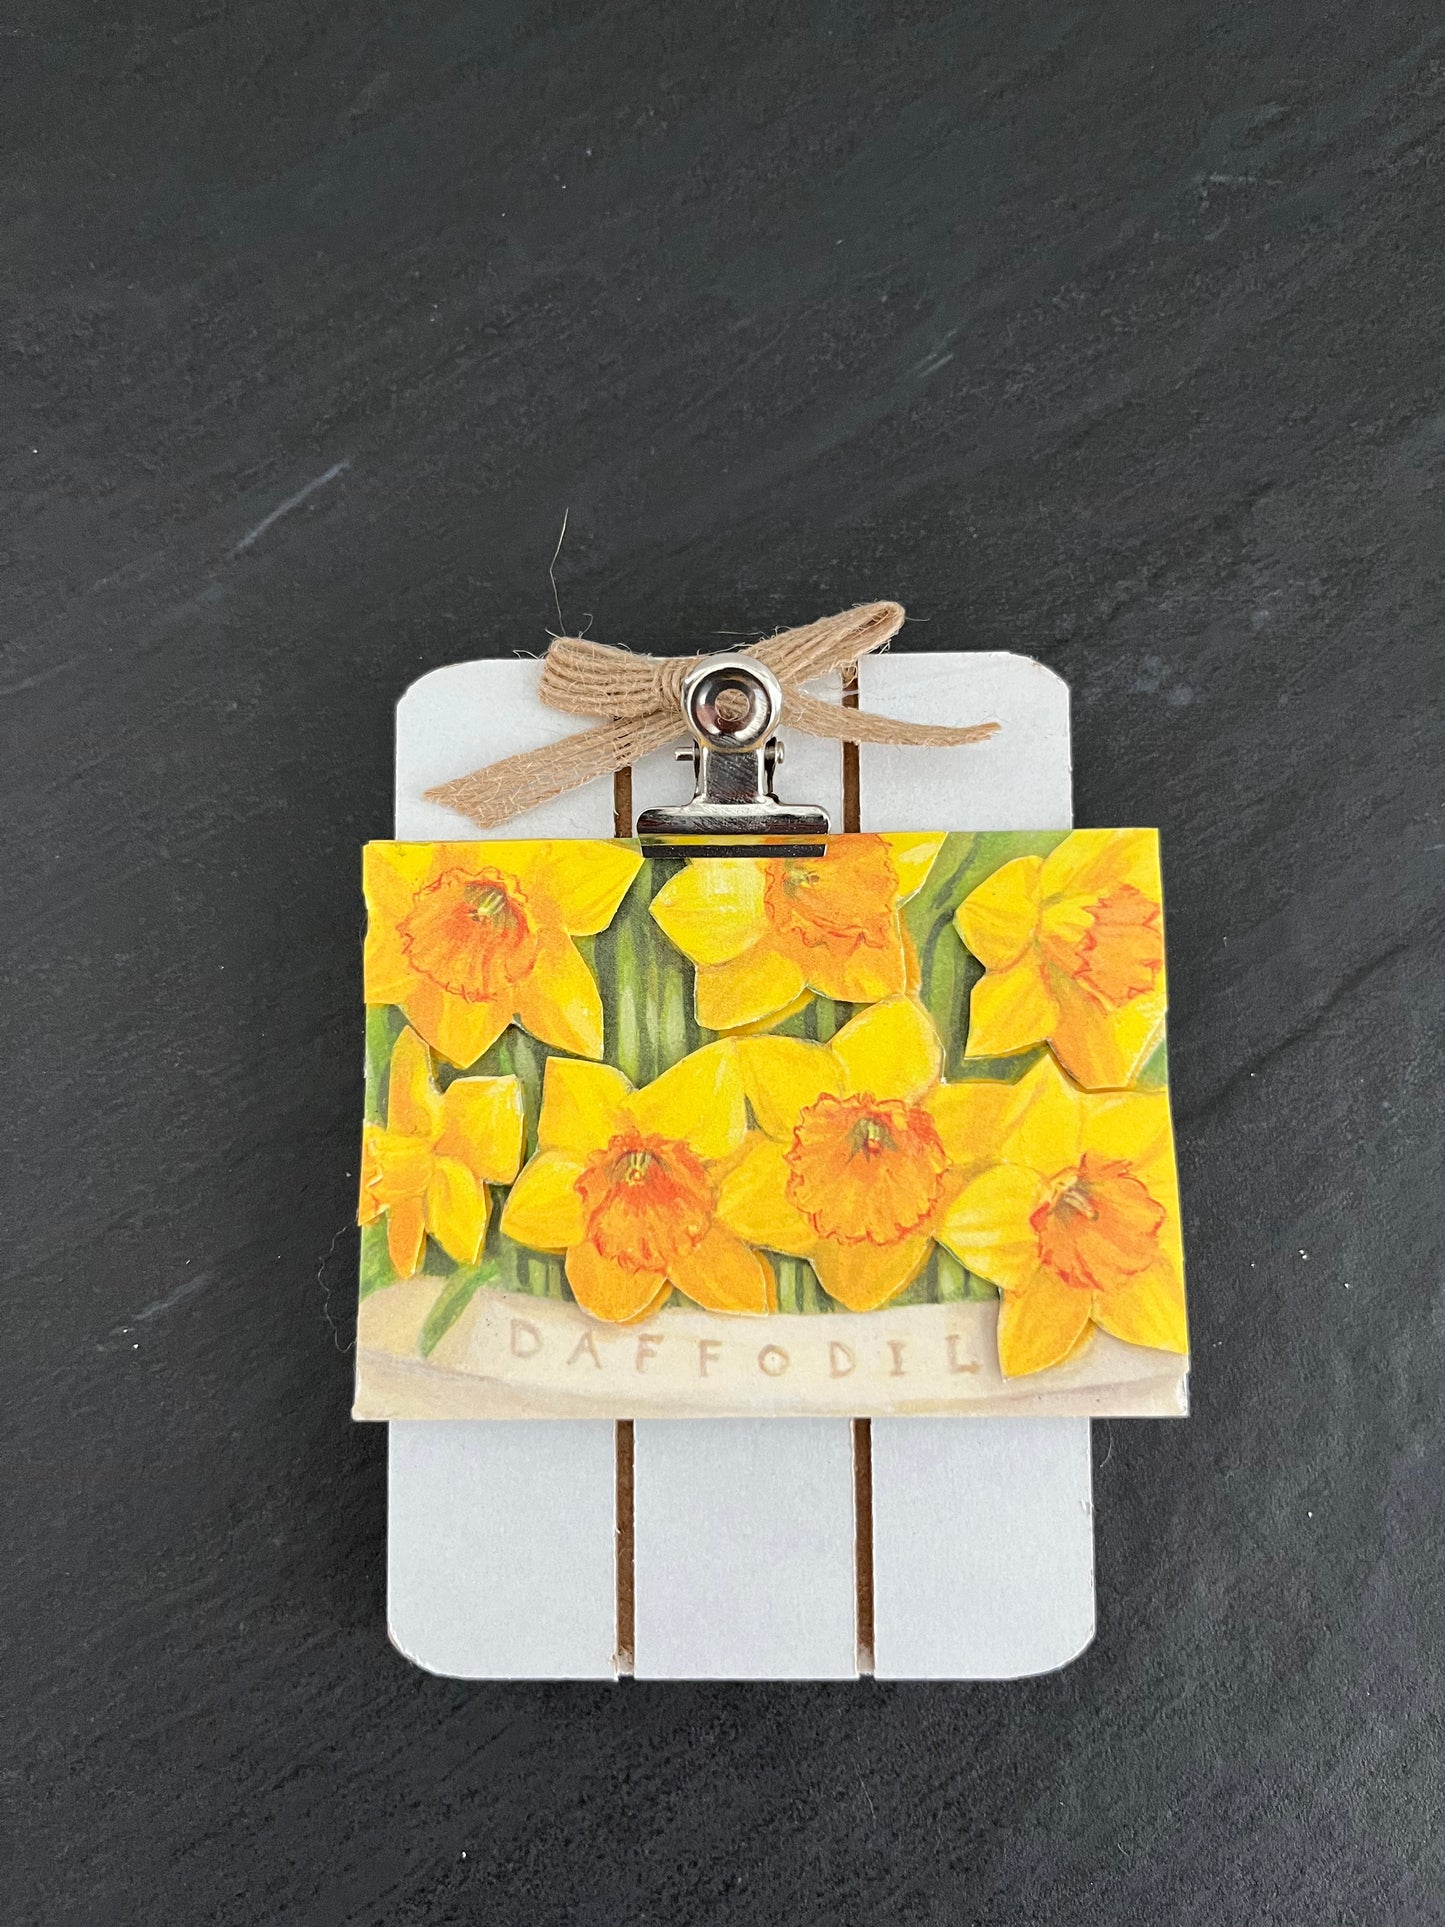 Art Card Modern 2010 Original Mixed Media with Yellow Flower Daffodil Application